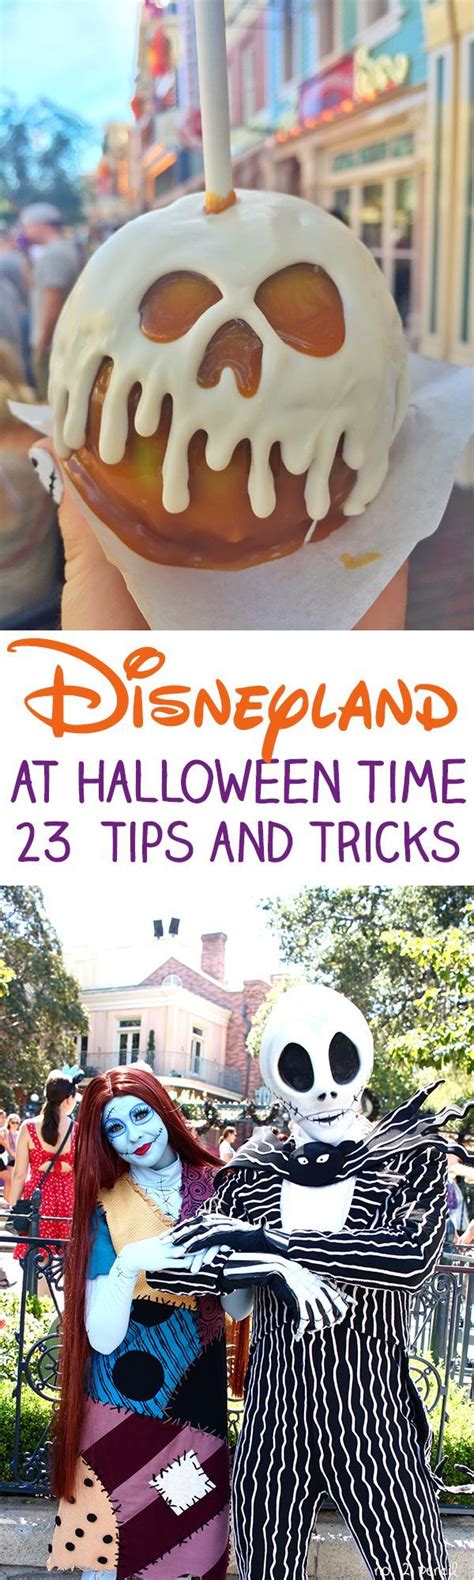 Tips For Disneyland At Halloween Time 2015 Disneyland Halloween